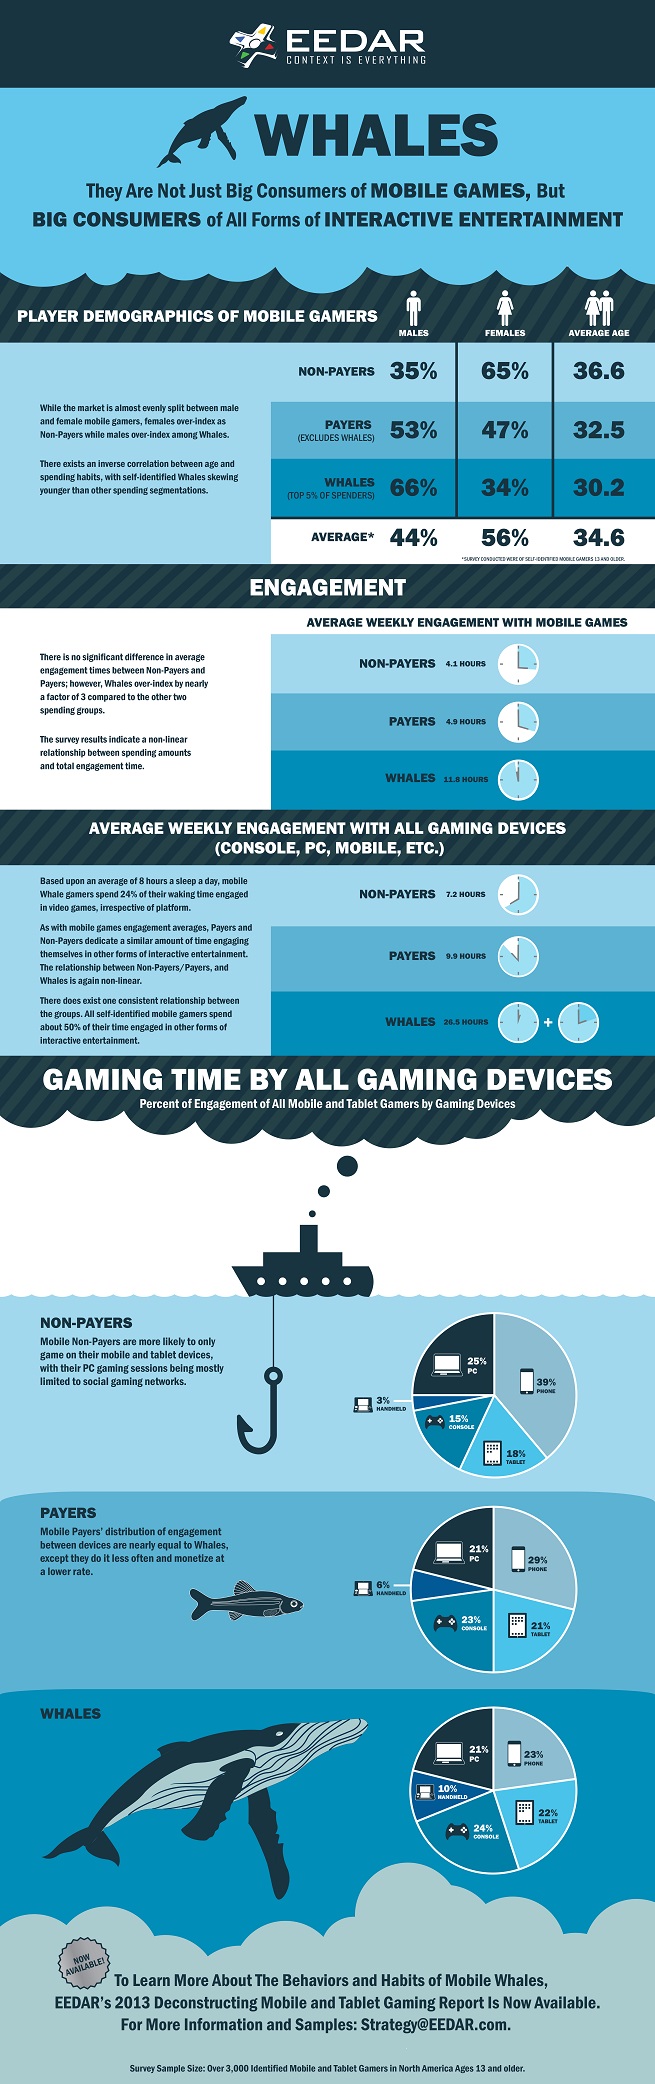 EEDAR mobile gaming infographic